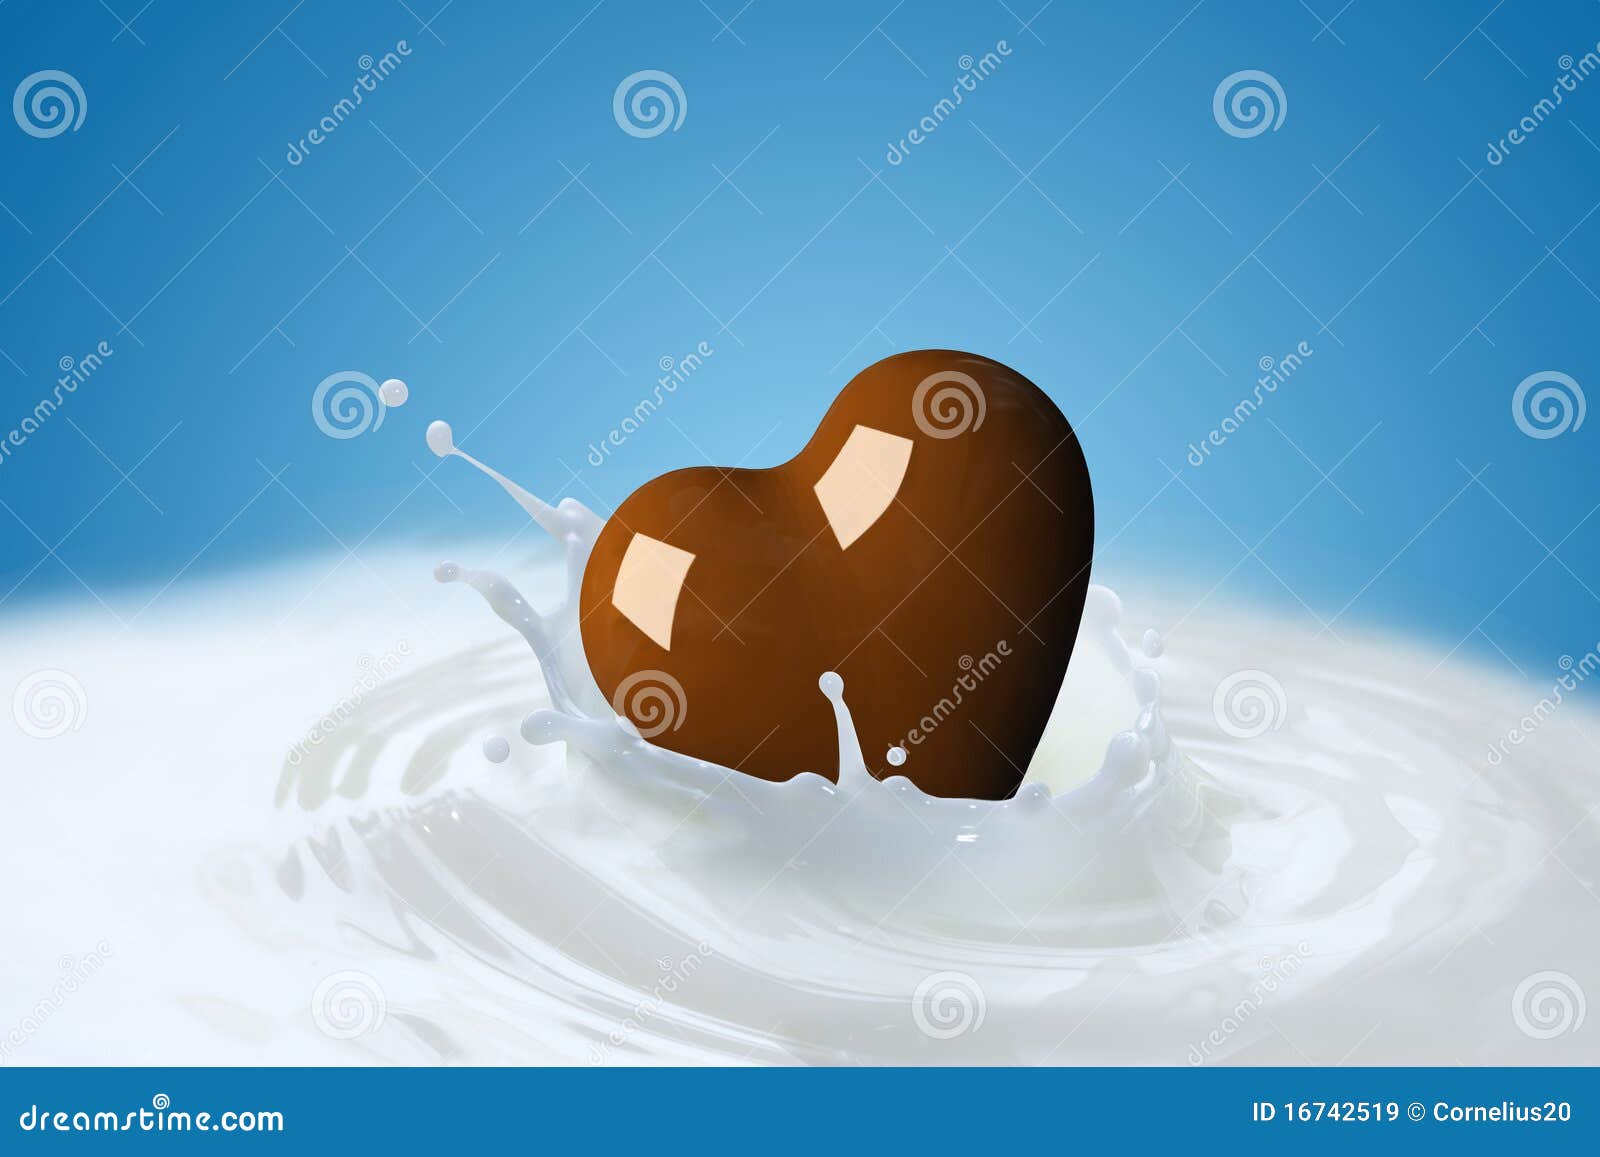 Chocolate and milk. Chocolate heart in a milk splash